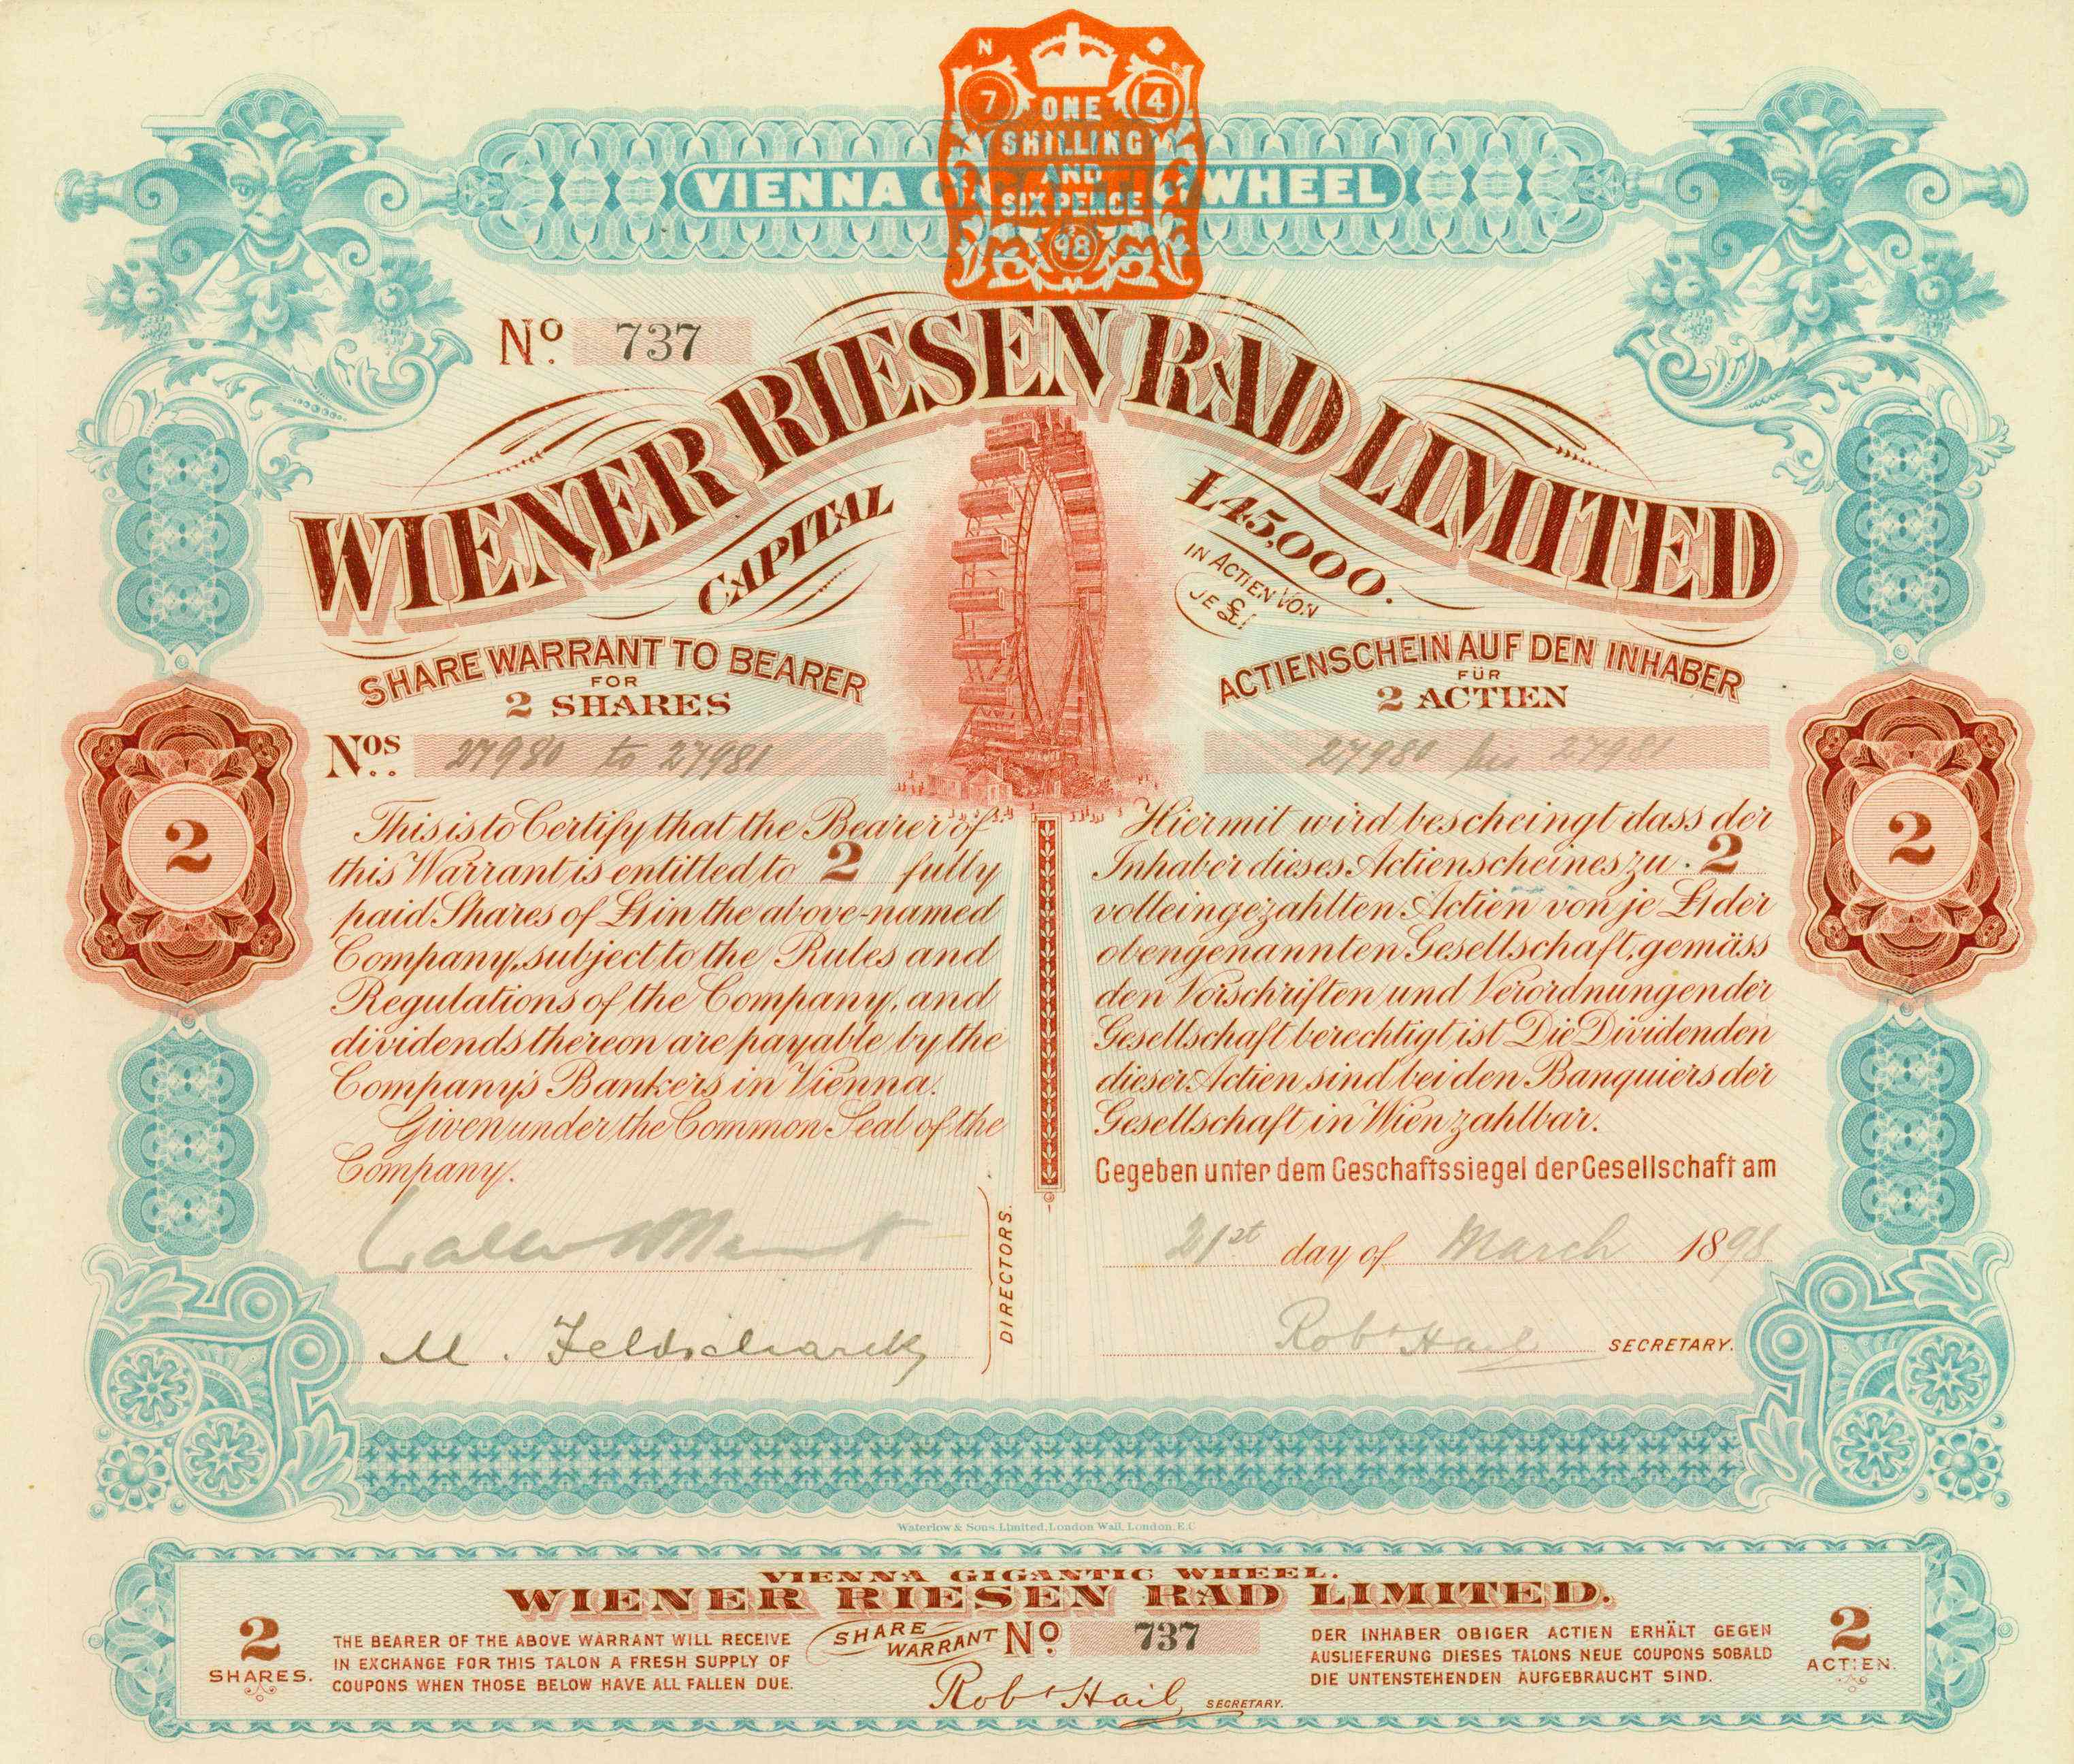 Share of the Wiener Riesen Rad Ltd., issued 21. March 1898